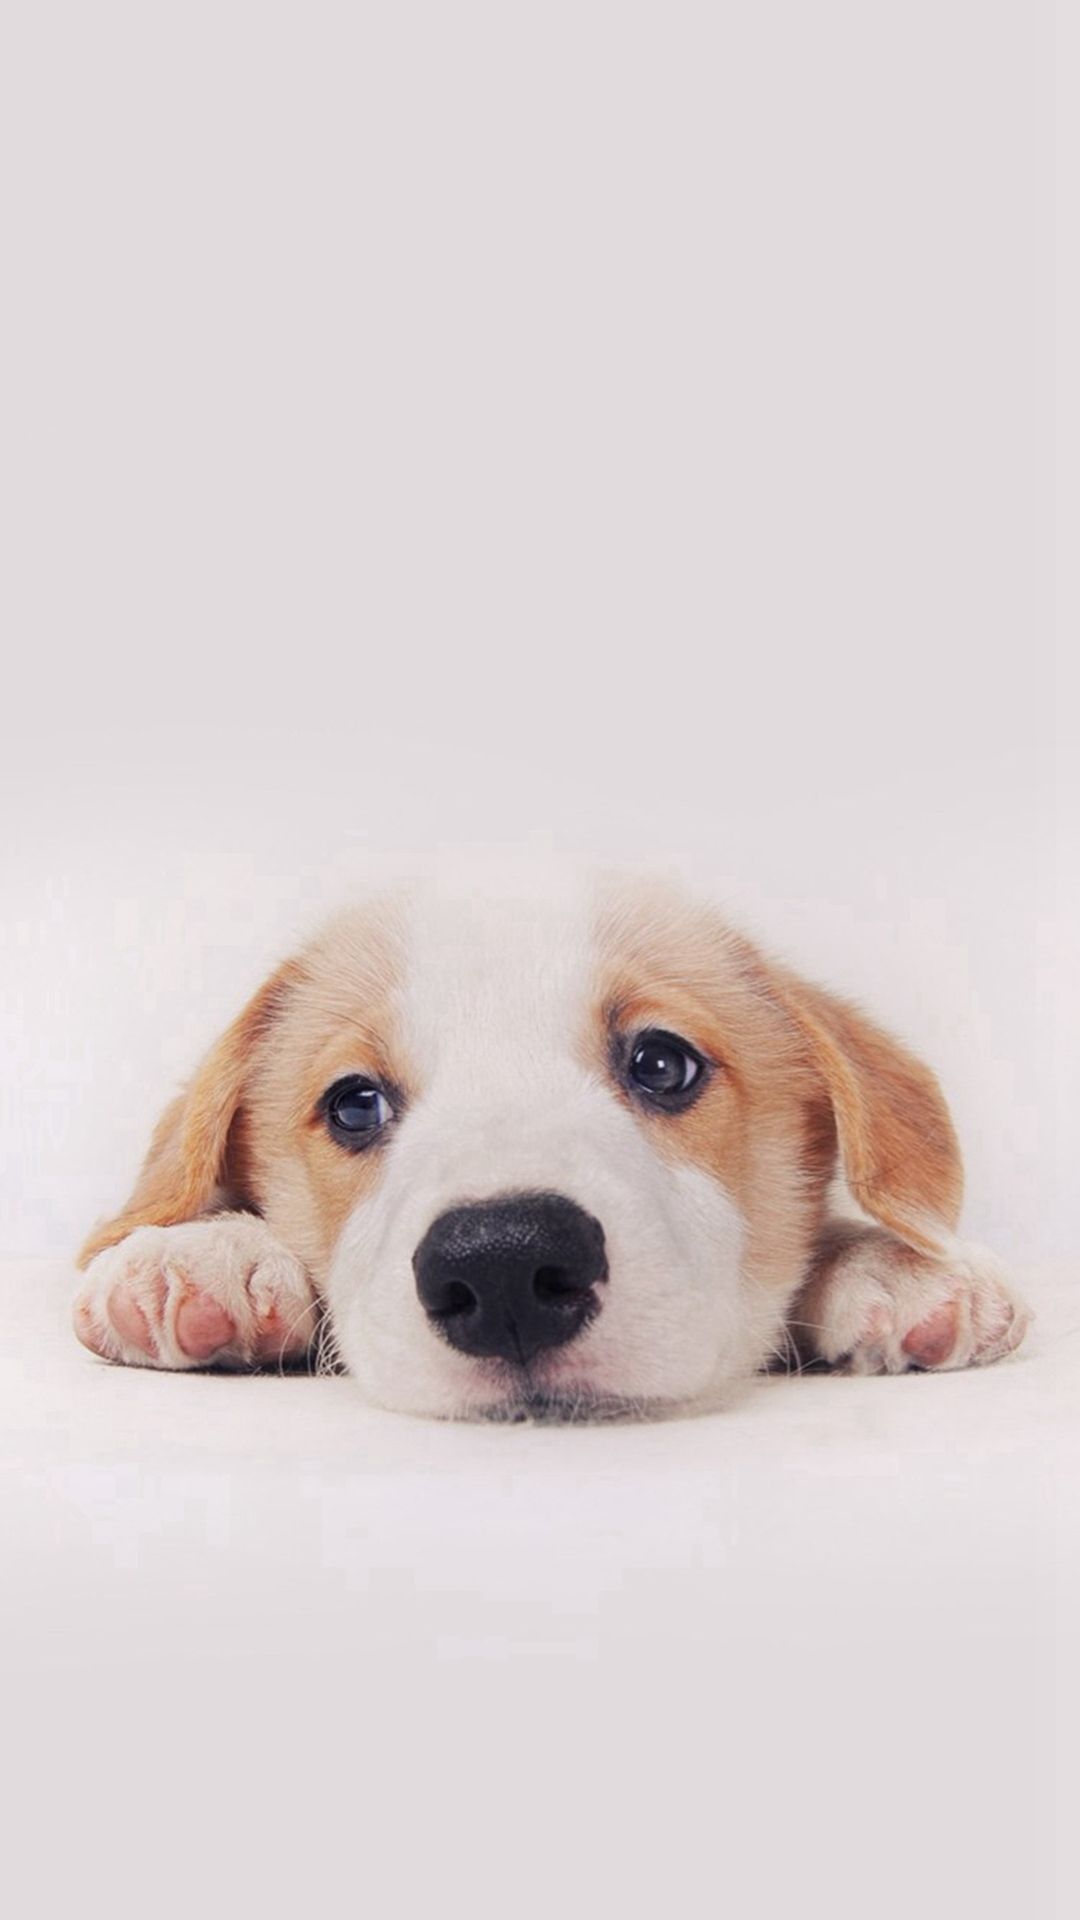 Cute Puppy Dog Pet iPhone Wallpaper